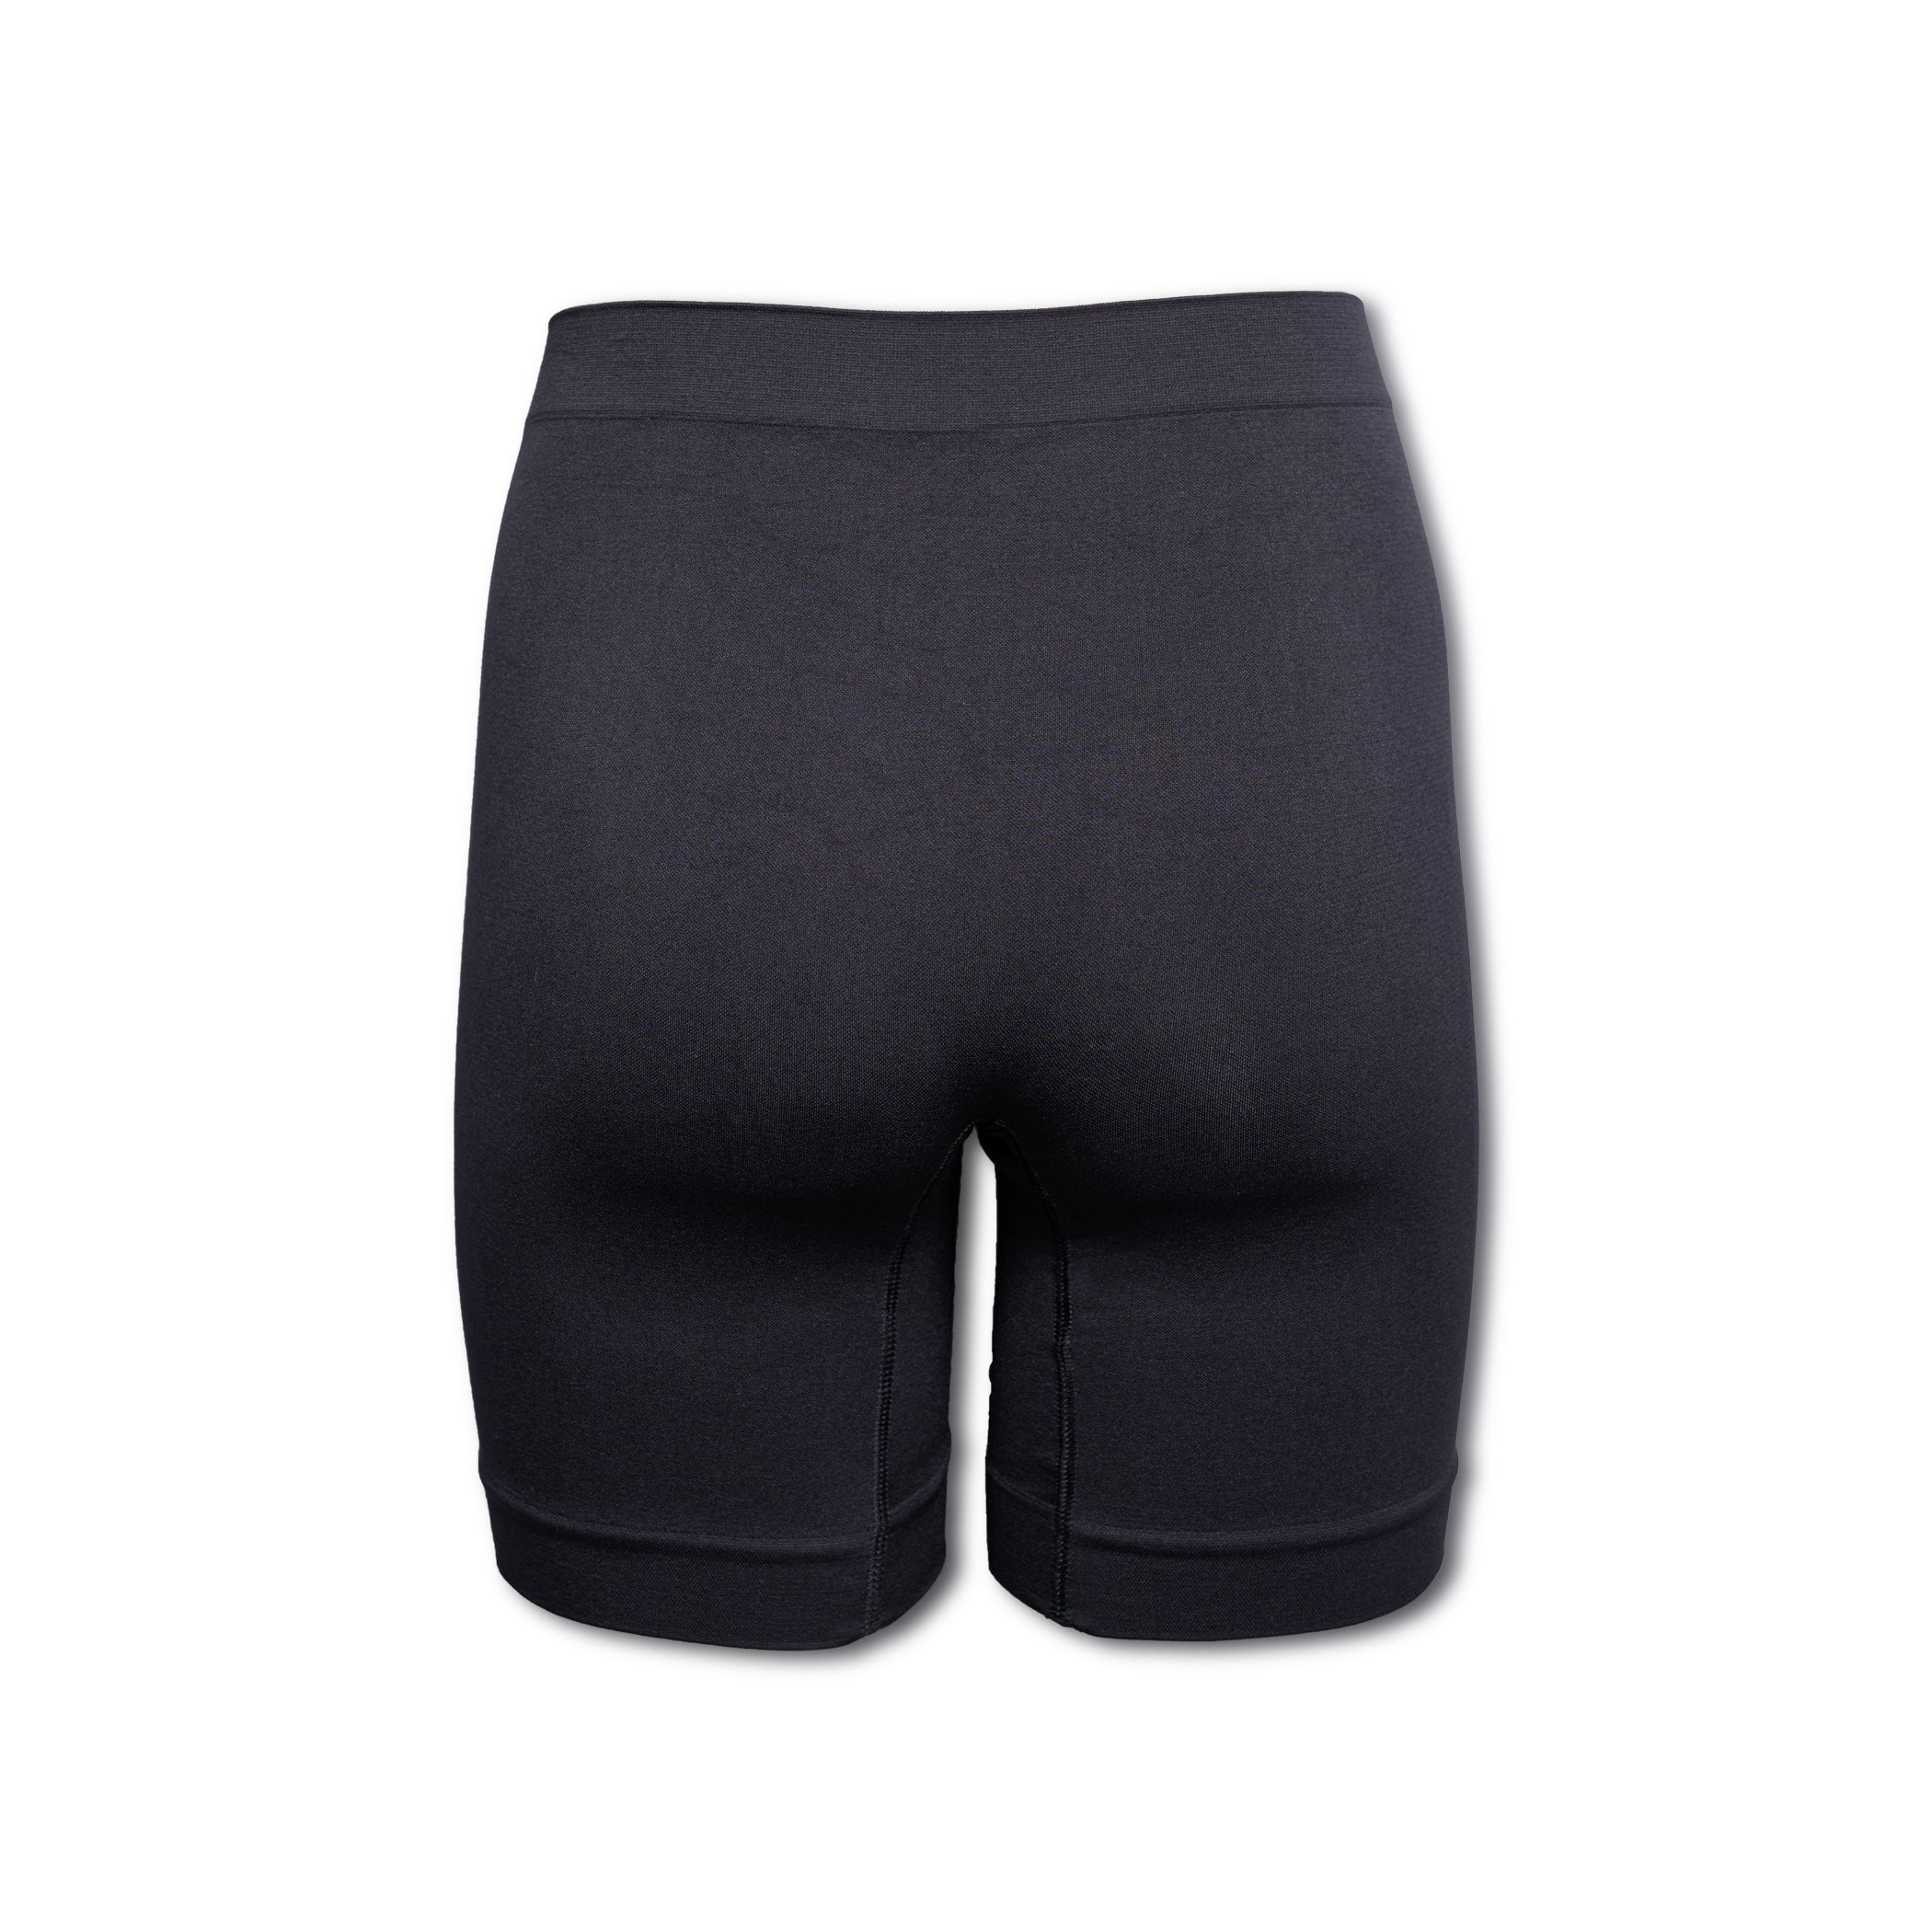 2 Pack - Seamfree Underwear - Men's Seamless Longer Leg Boxers